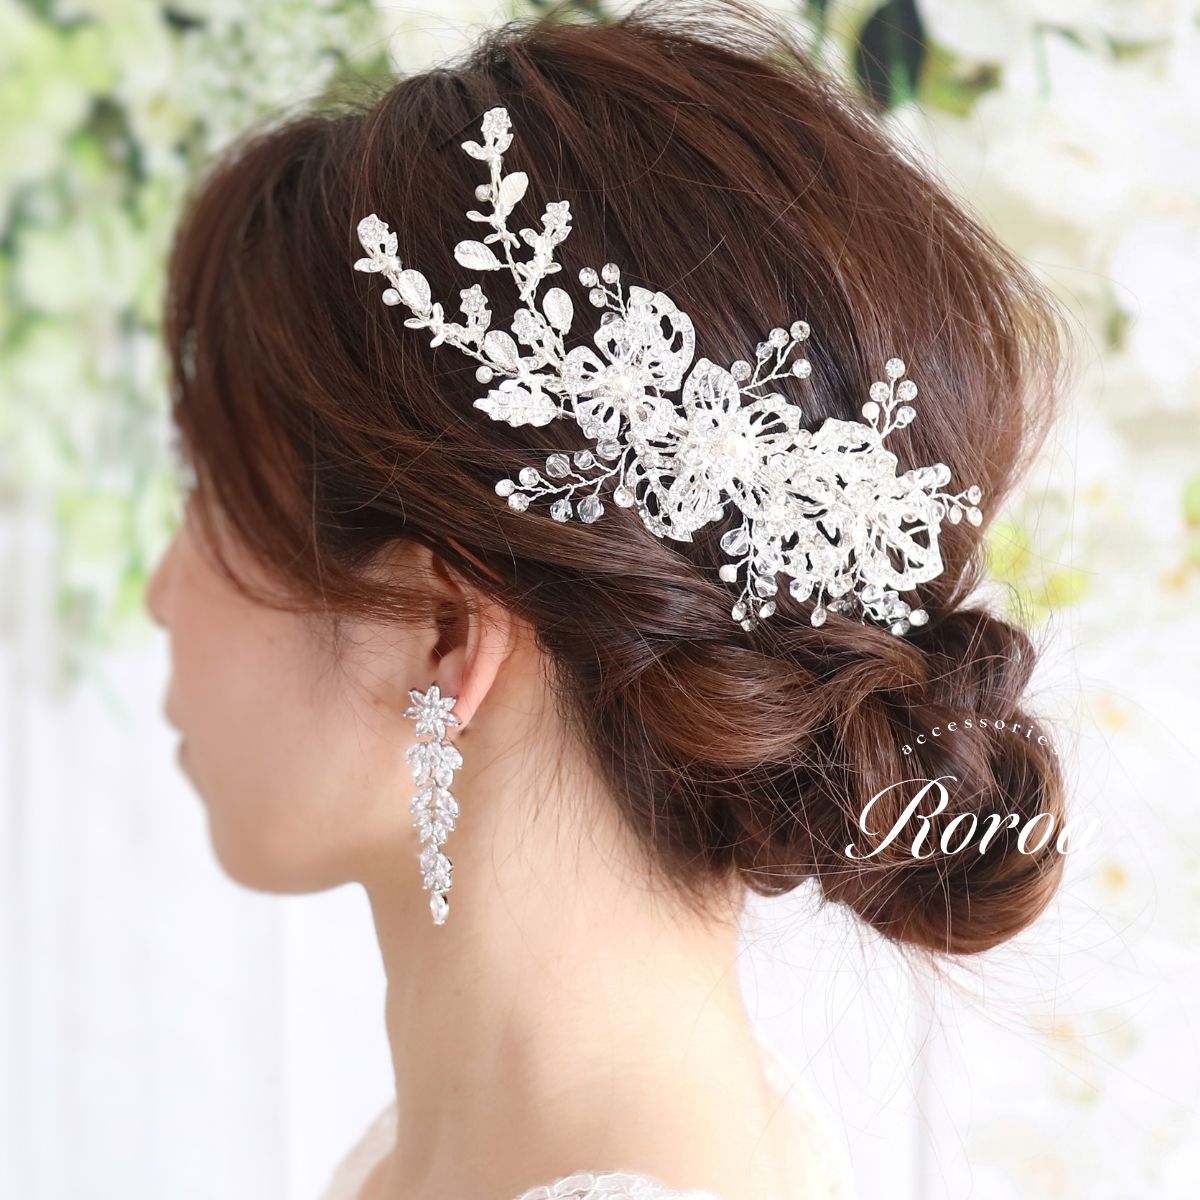 8M♡シルバーヘッドドレス☆髪飾りブライダルヘアアクセサリー花ウェディング結婚式